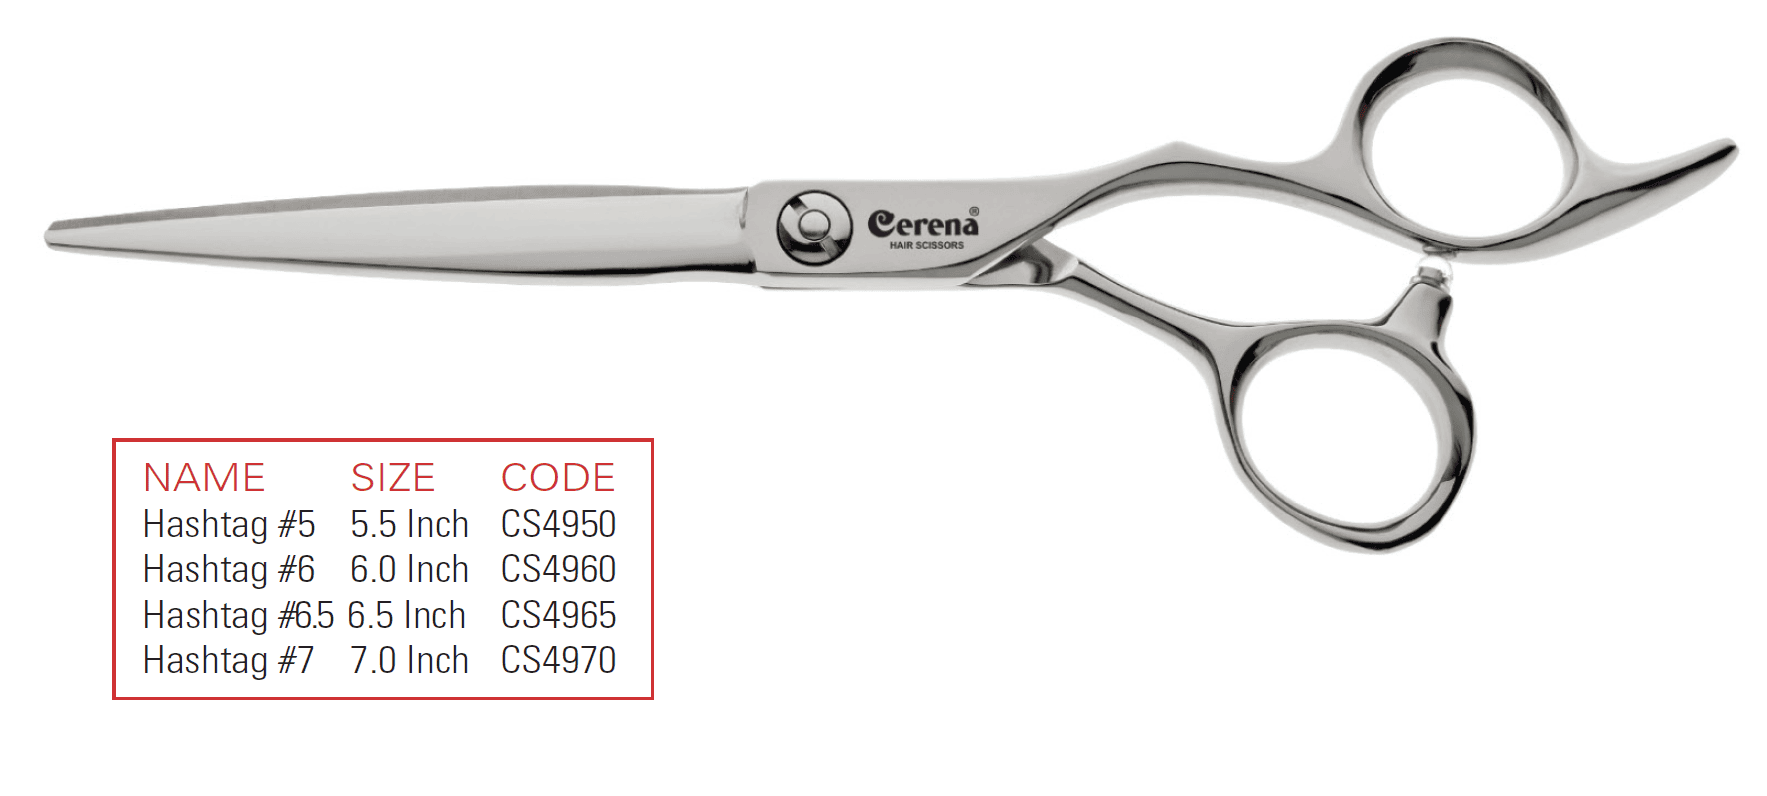 Cerena Hashtag No5 - 4950 - 5.5 Inch Scissor